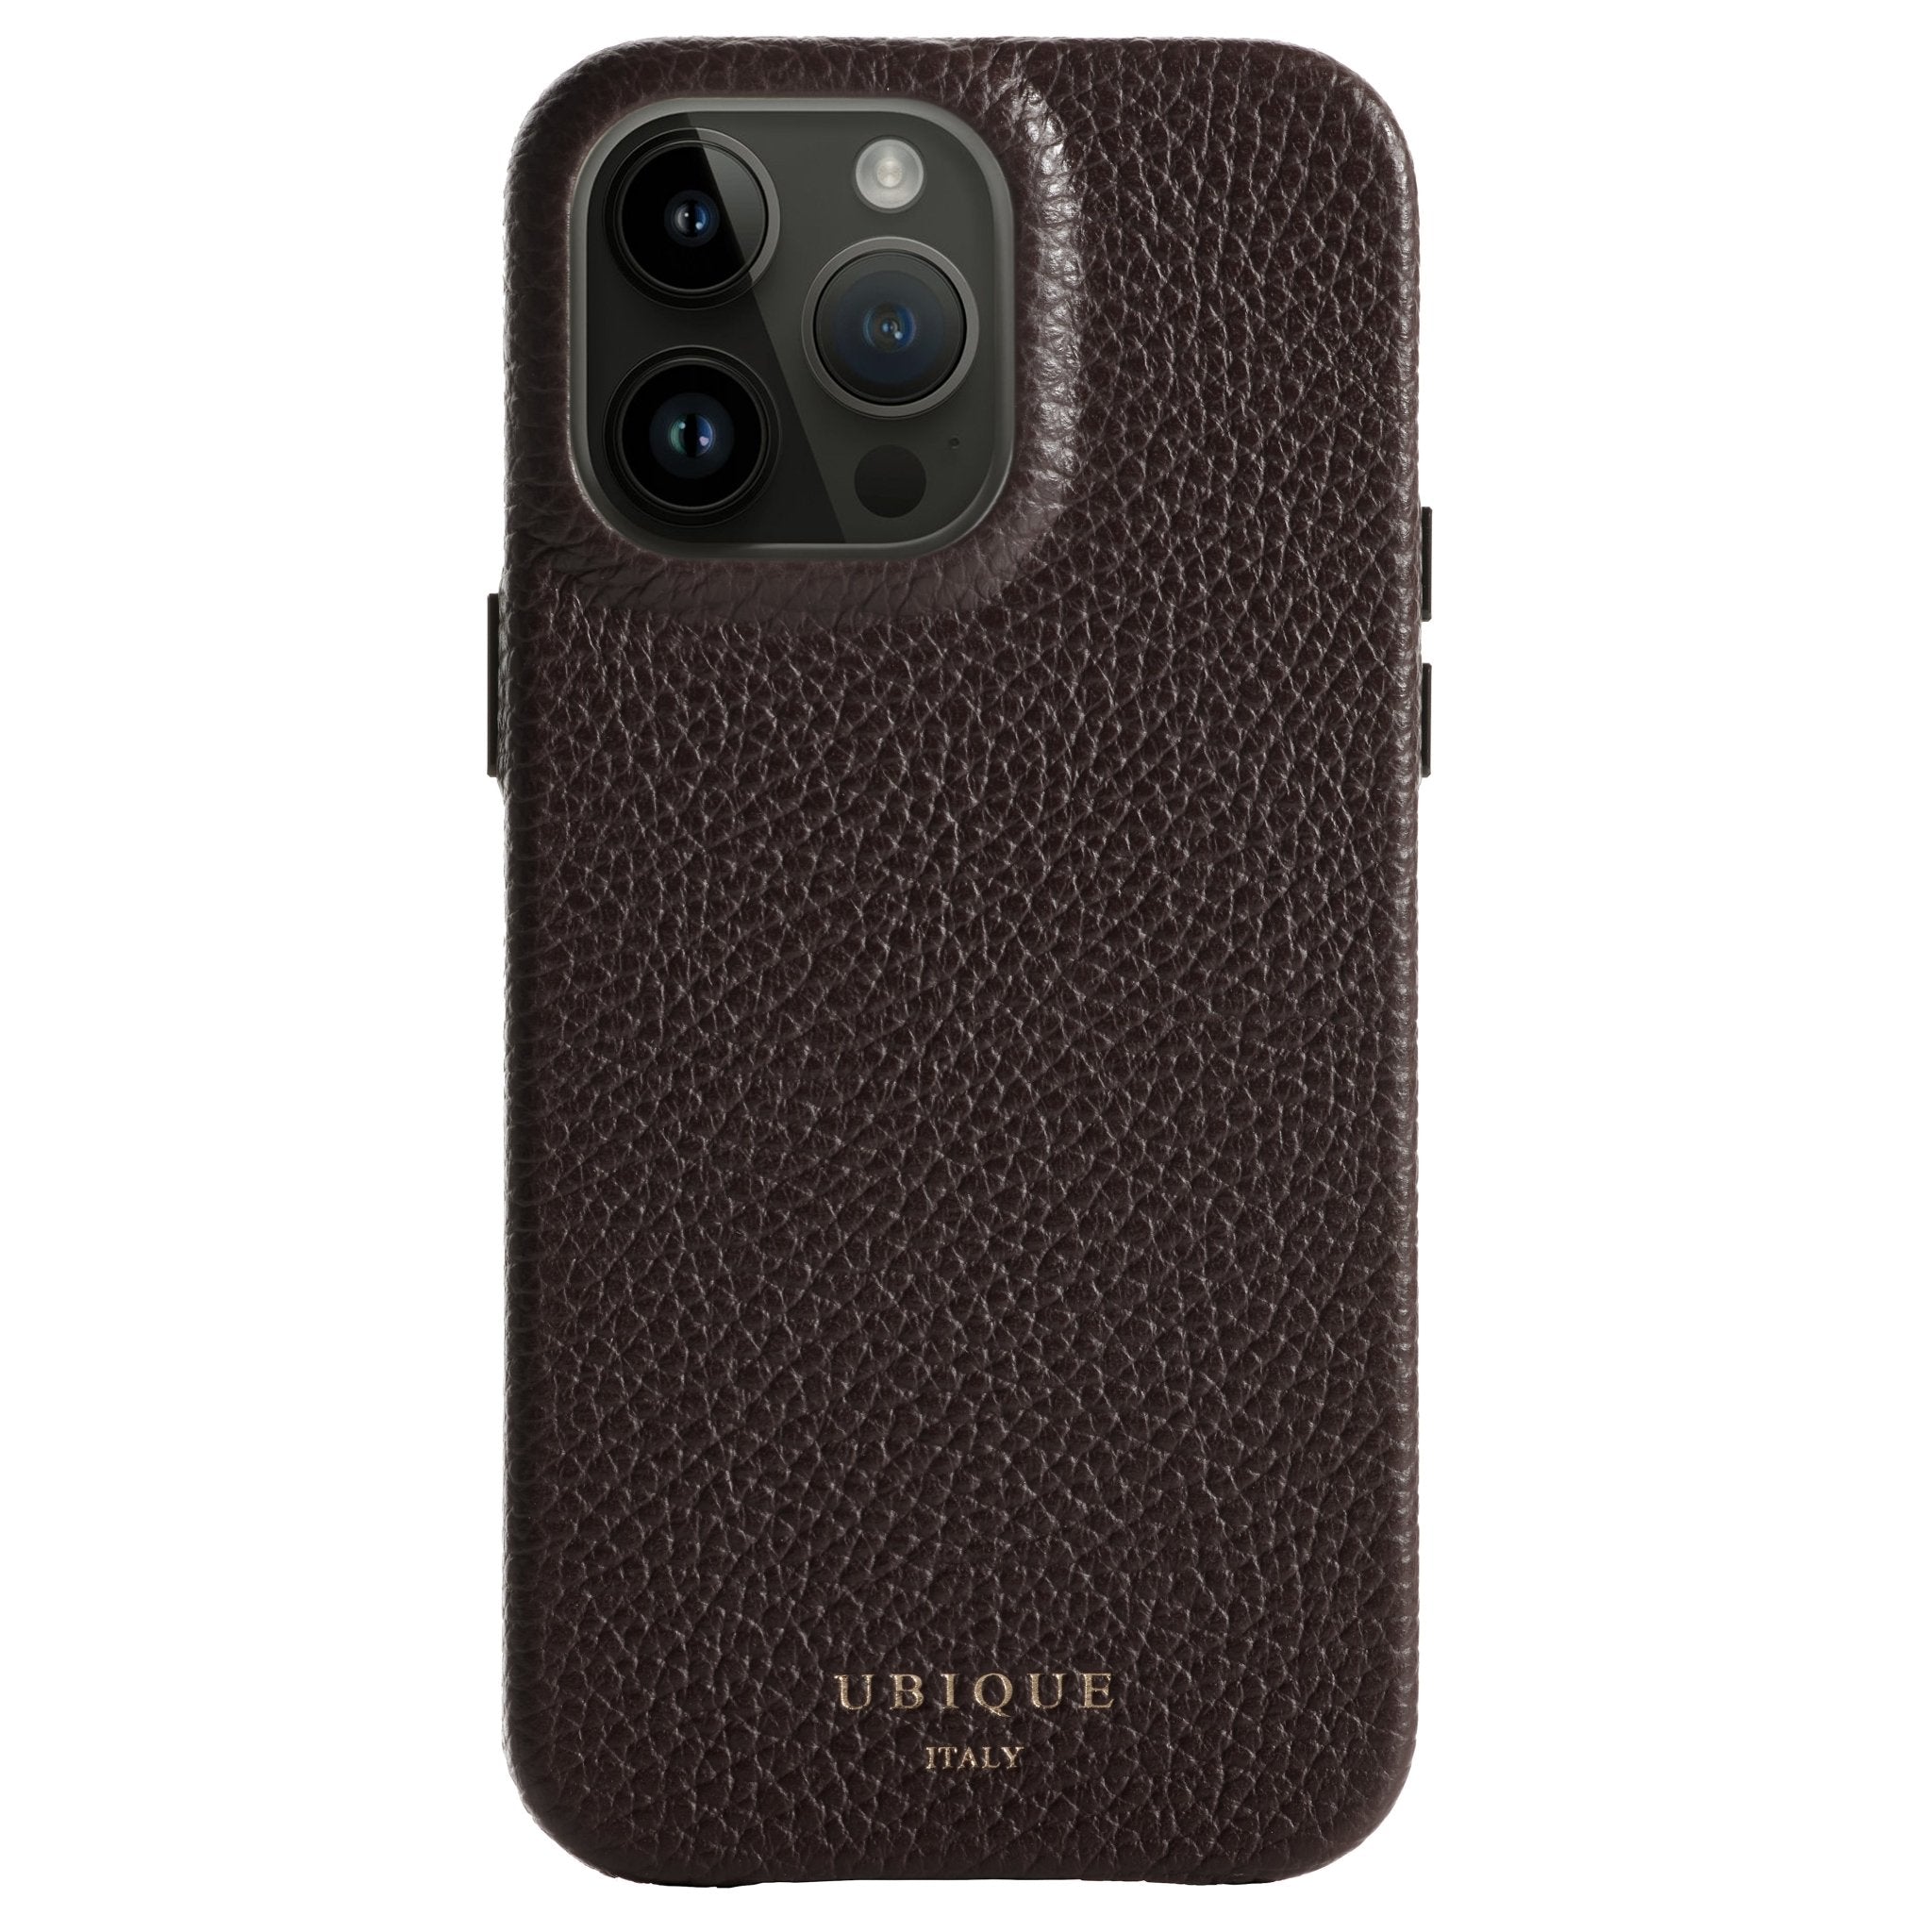 Ubique Italy Luxury iPhone Case 14 Pro Max Pebble Grain Leather Dark Walnut Front